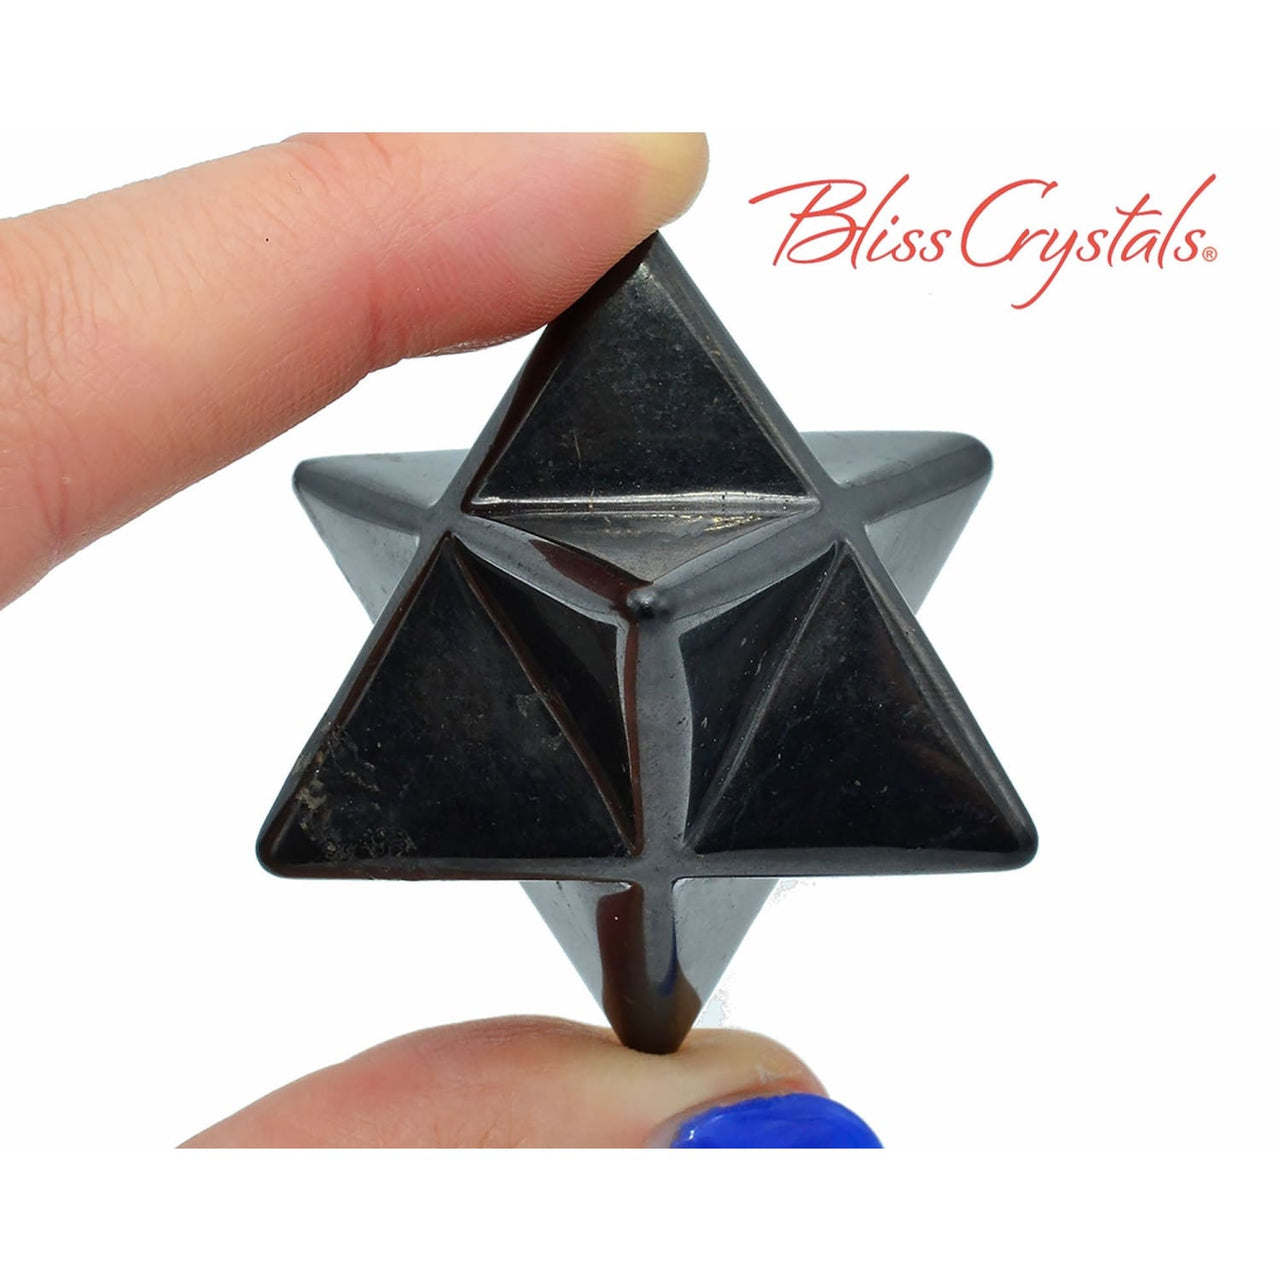 1 SHUNGITE Merkaba 8 Point Star + Bag Healing Crystal and 